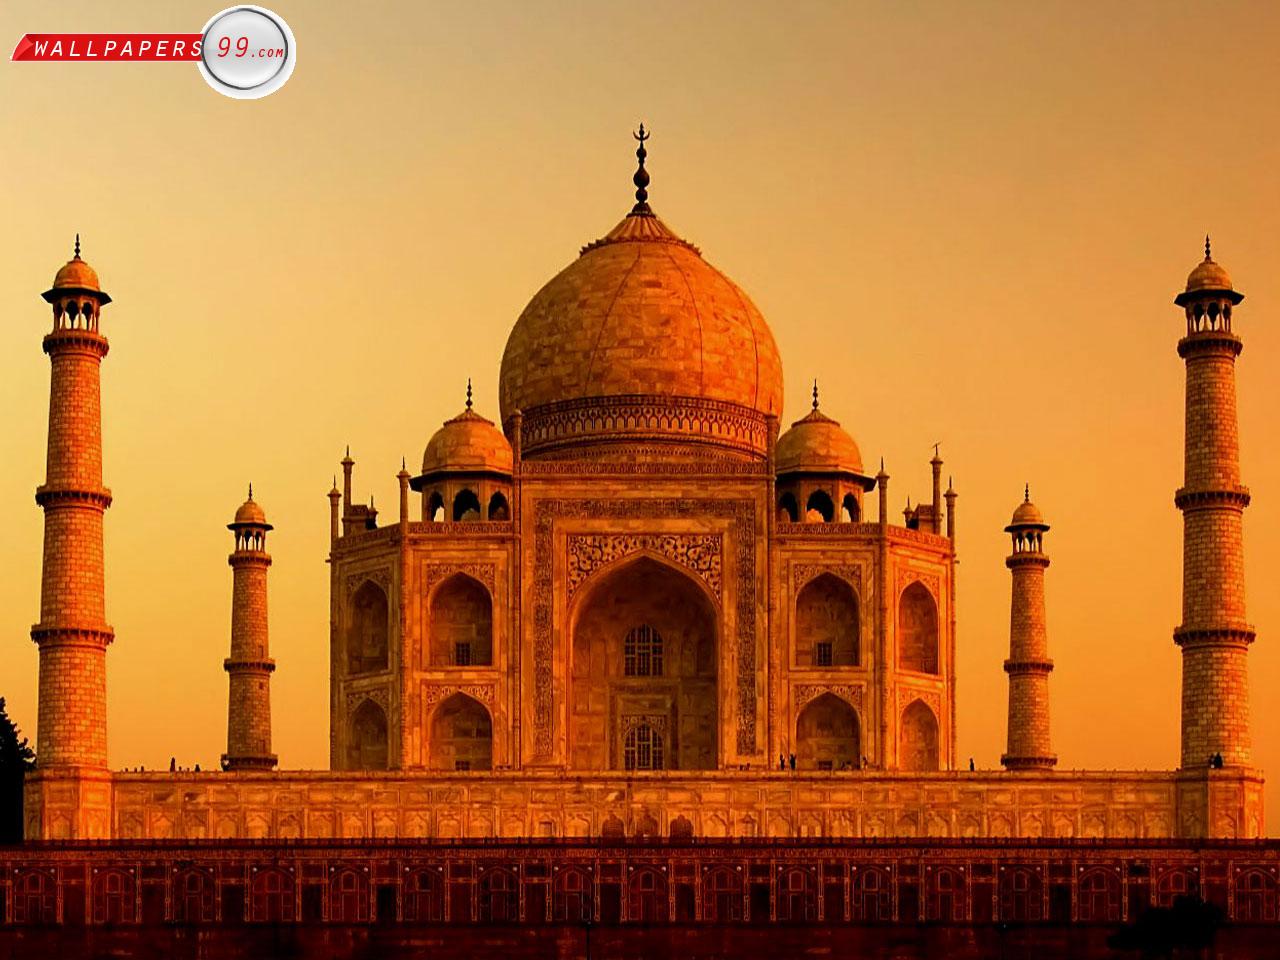 HD WALLPAPER GALLERY: Taj Mahal India wallpaper